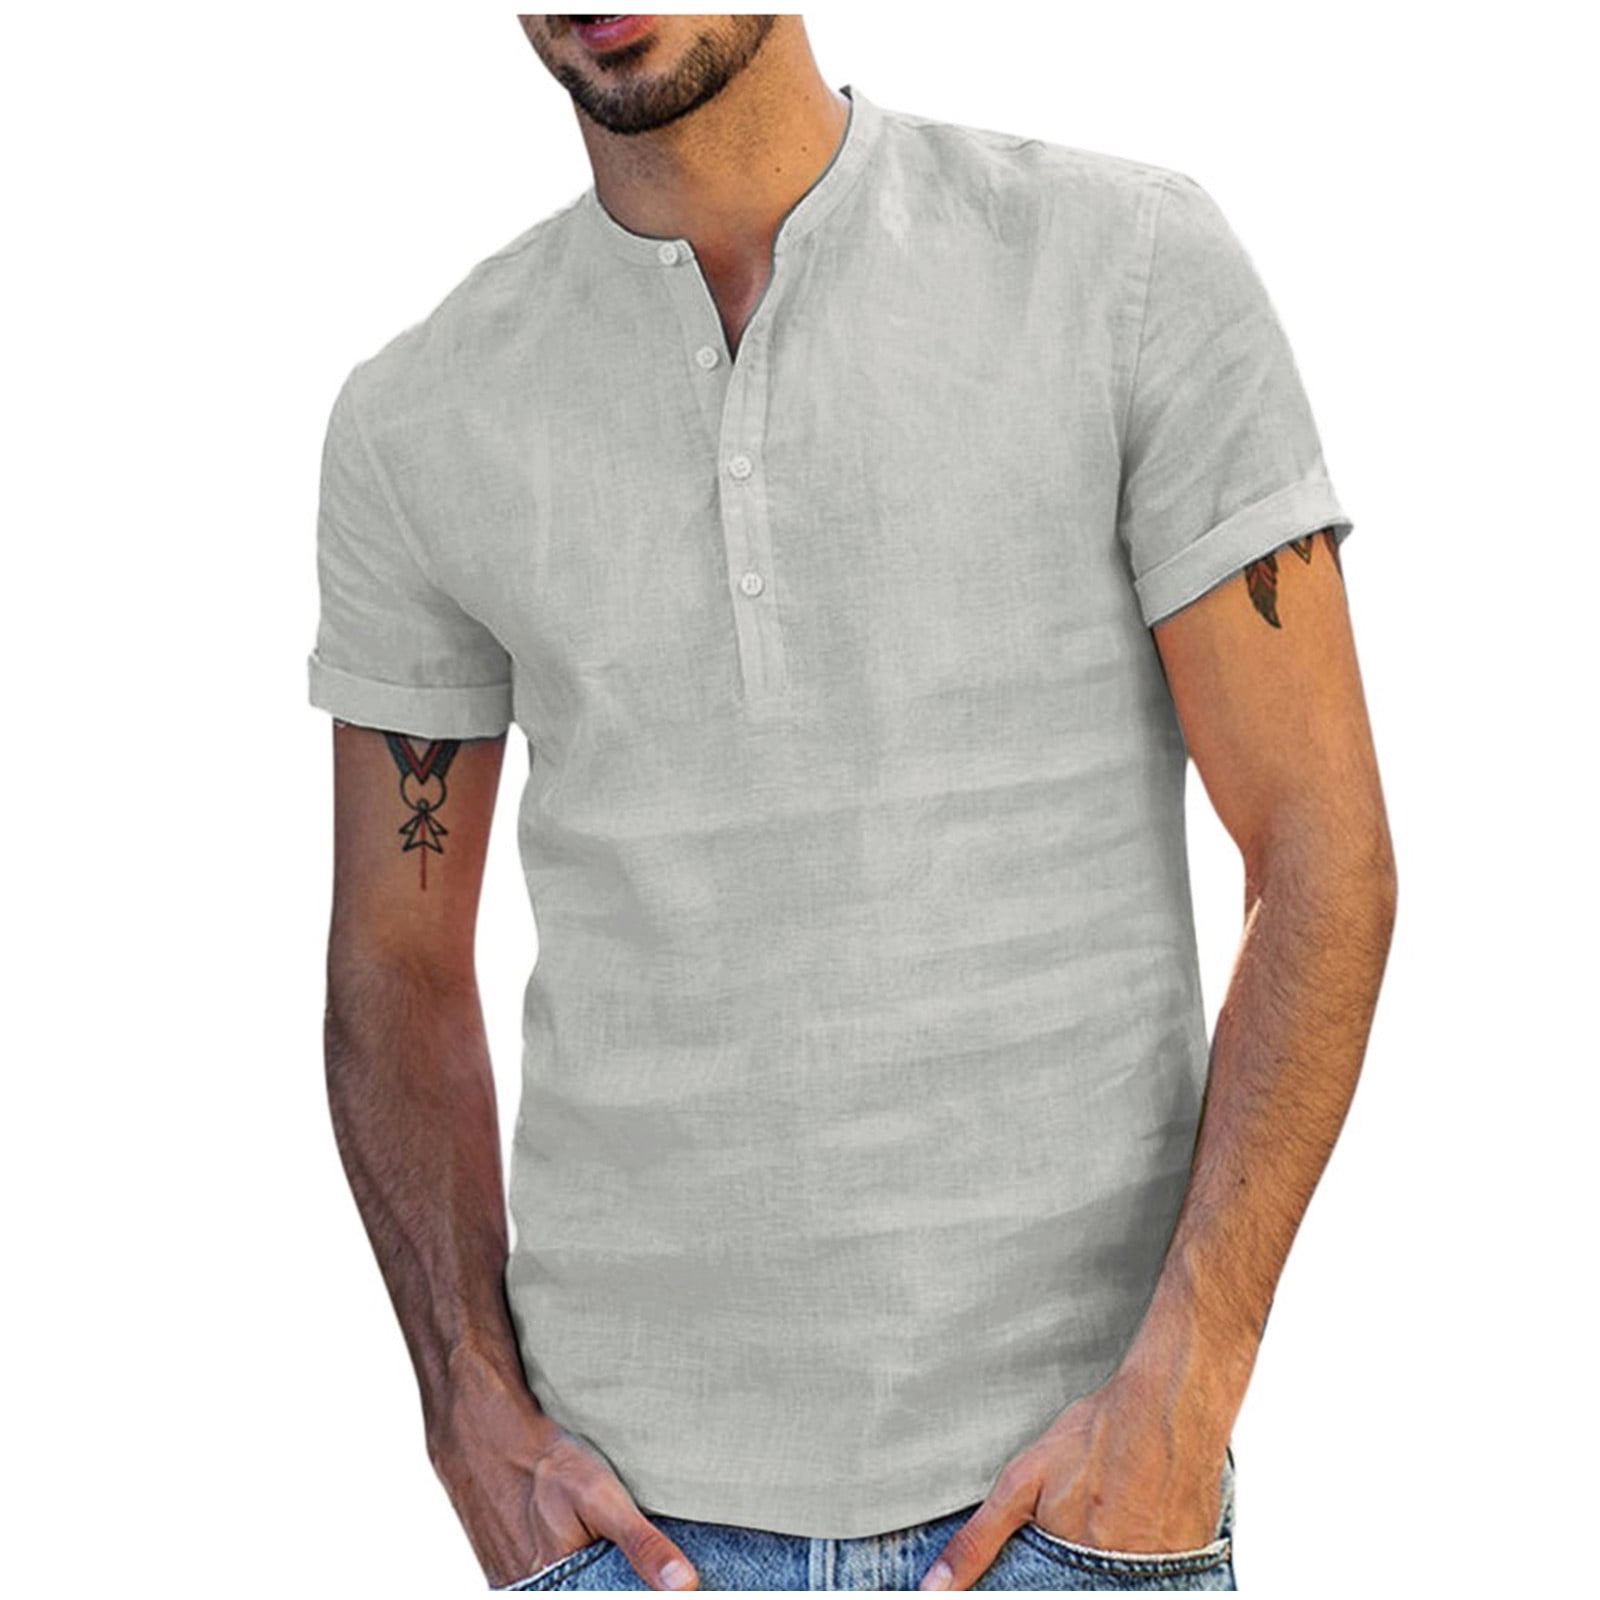 Men's Linen Cotton V Neck Short Sleeve Basic Tee T-shirt Casual Tops Blouse Tee 